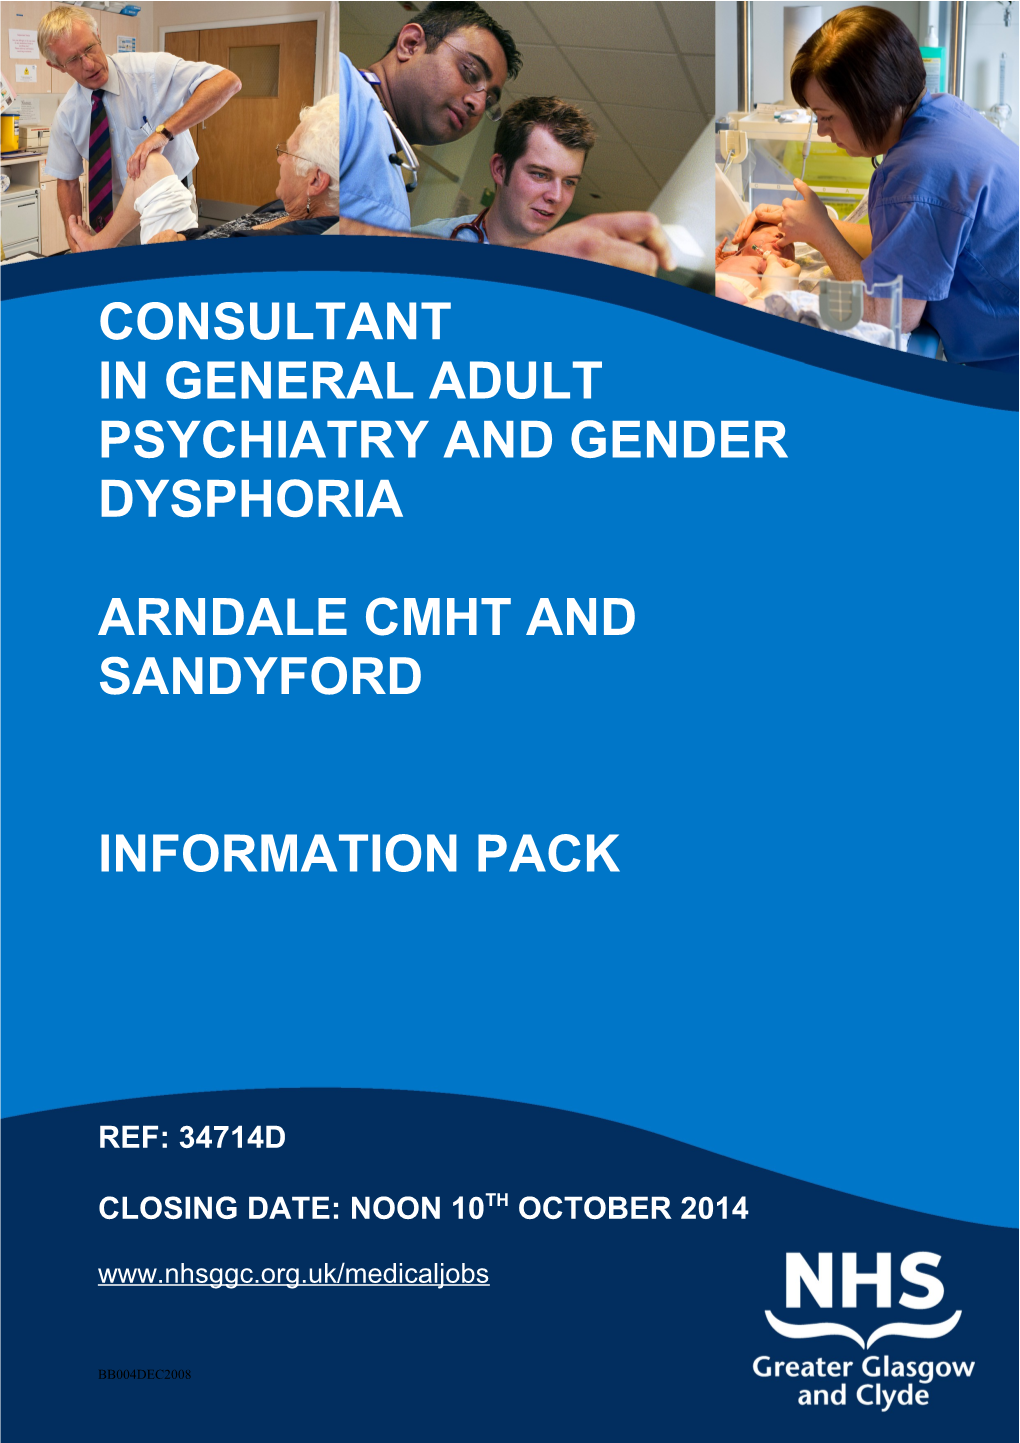 In General Adult Psychiatry and Gender Dysphoria